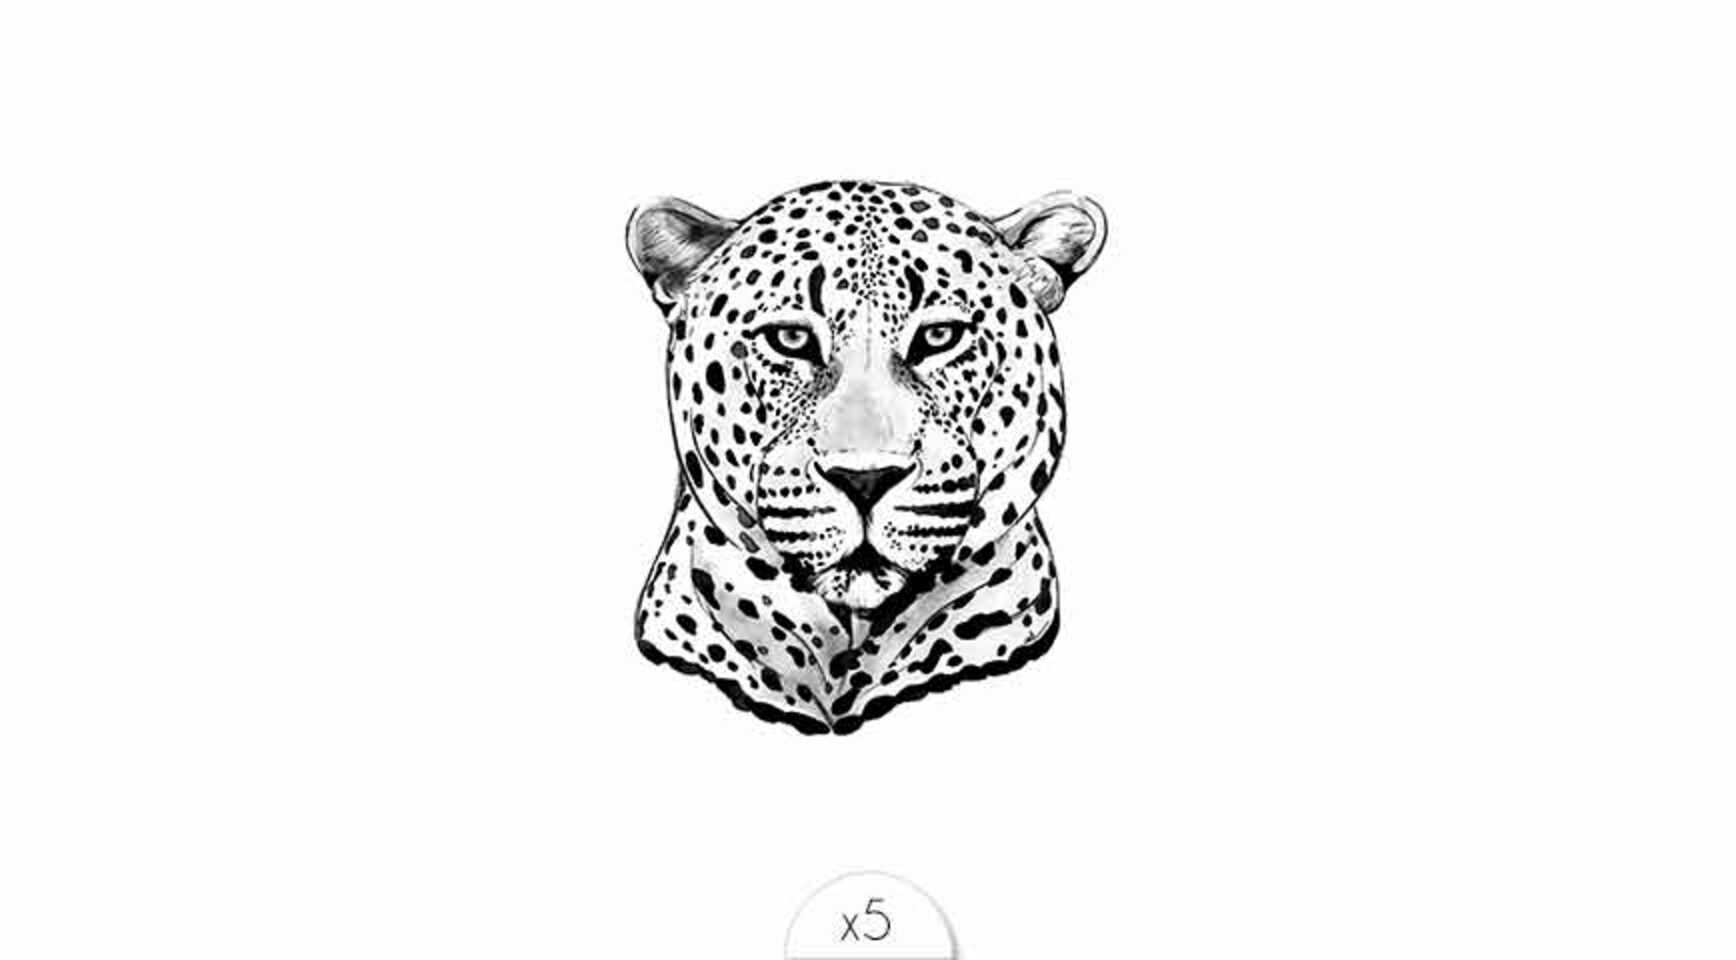 How to Draw a Cheetah tattoo  Как нарисовать татуировку гепарда  YouTube